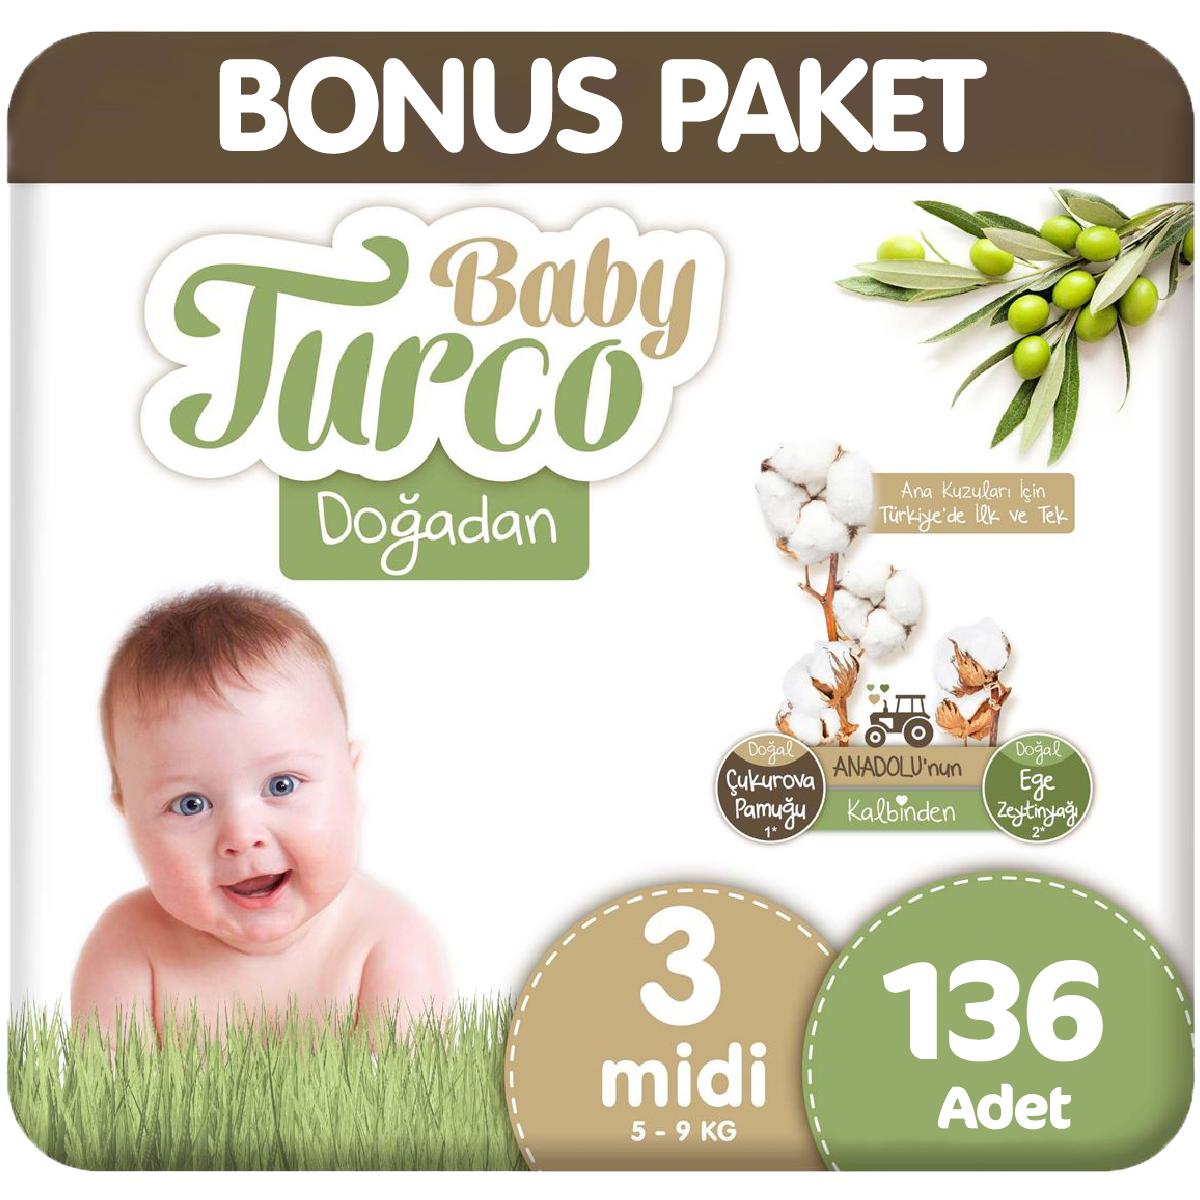 Baby Turco Doğadan Bonus Paket Bebek Bezi 3 Beden 136 Adet